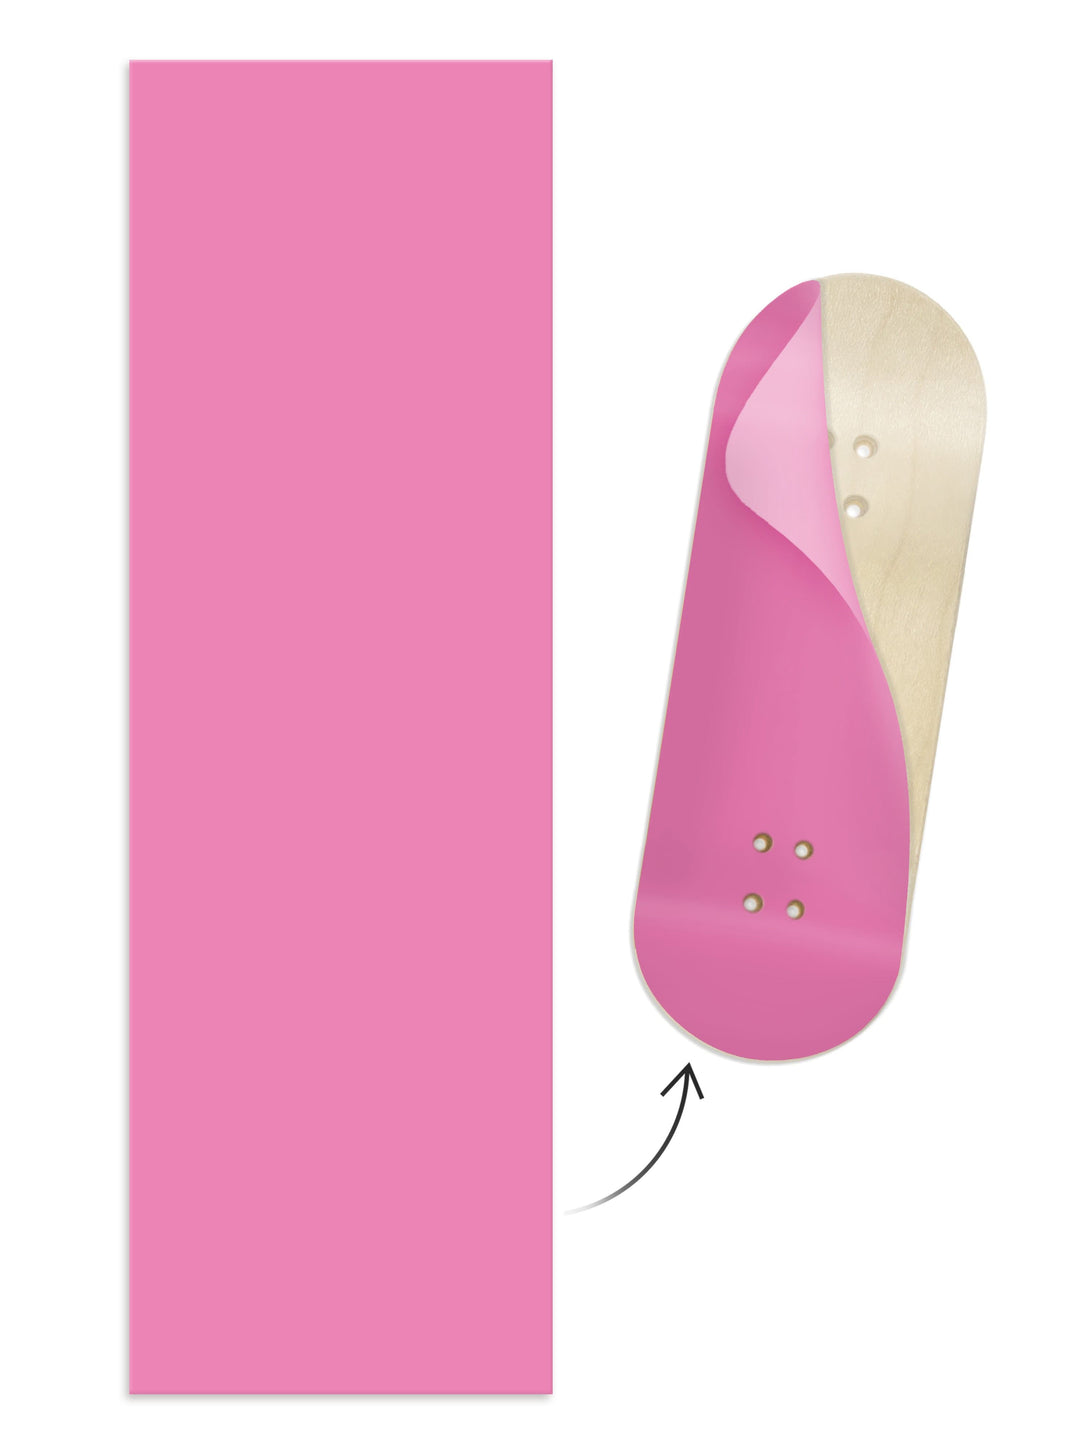 Teak Tuning "Primrose Pink Colorway" ColorBlock Fingerboard Deck Wrap - 35mm x 110mm